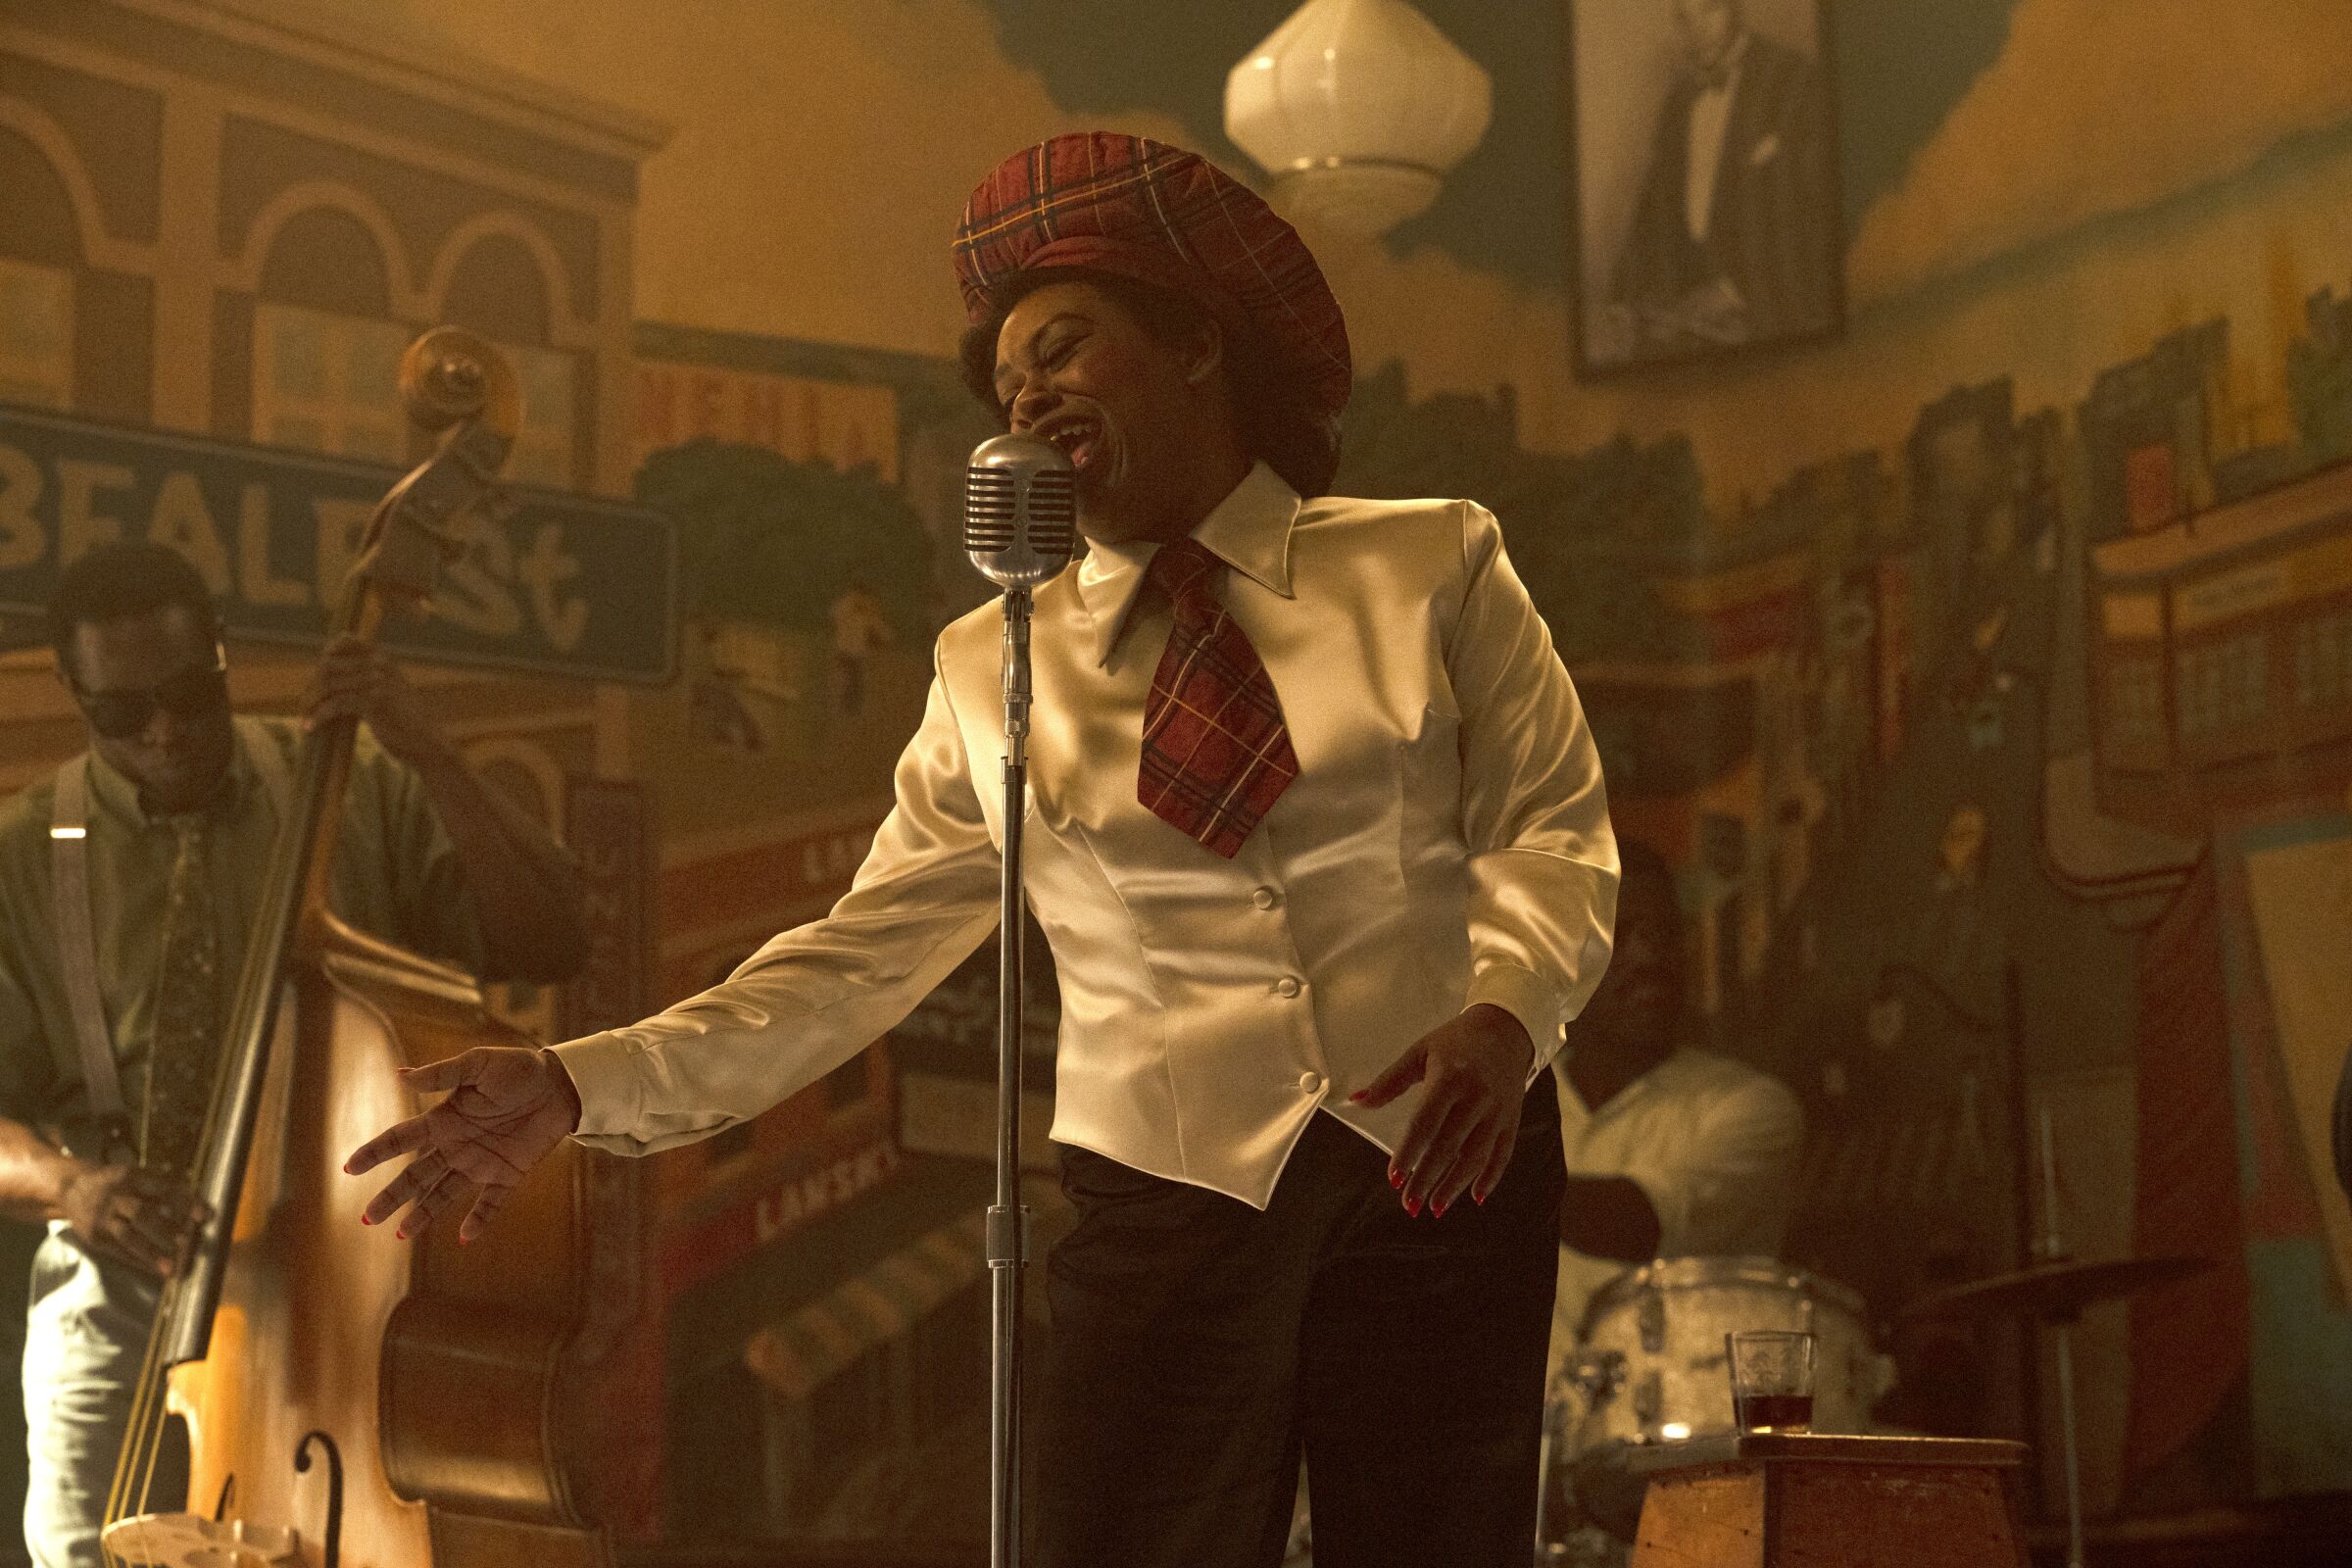 Shonka Dukureh performs onstage as Big Mama Thornton in Baz Luhrmann’s movie “Elvis.”